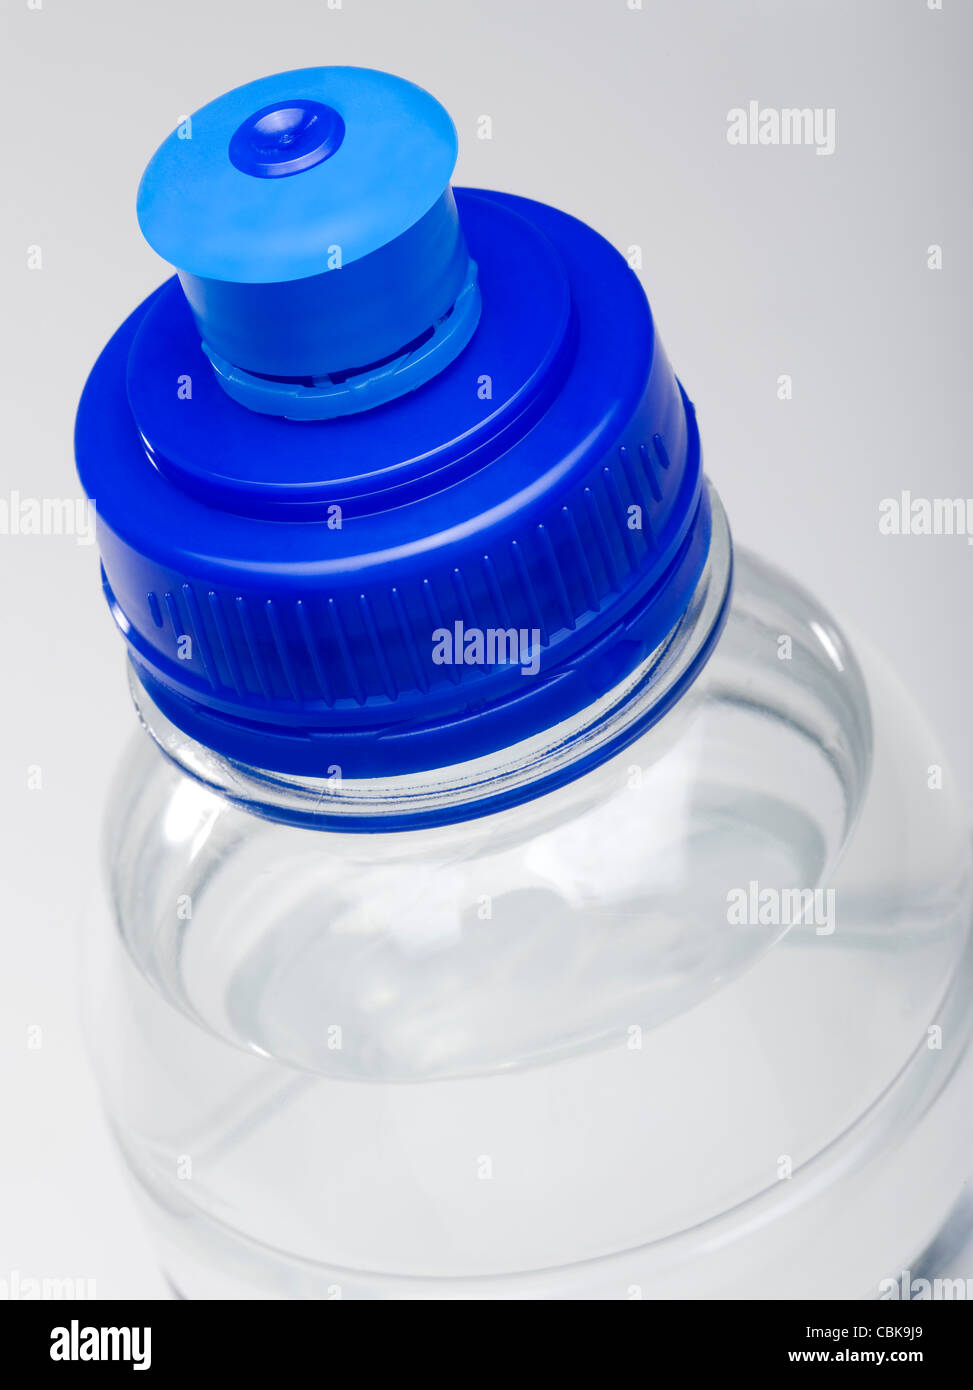 plastic bottle cap, hygienic and refreshing Stock Photo